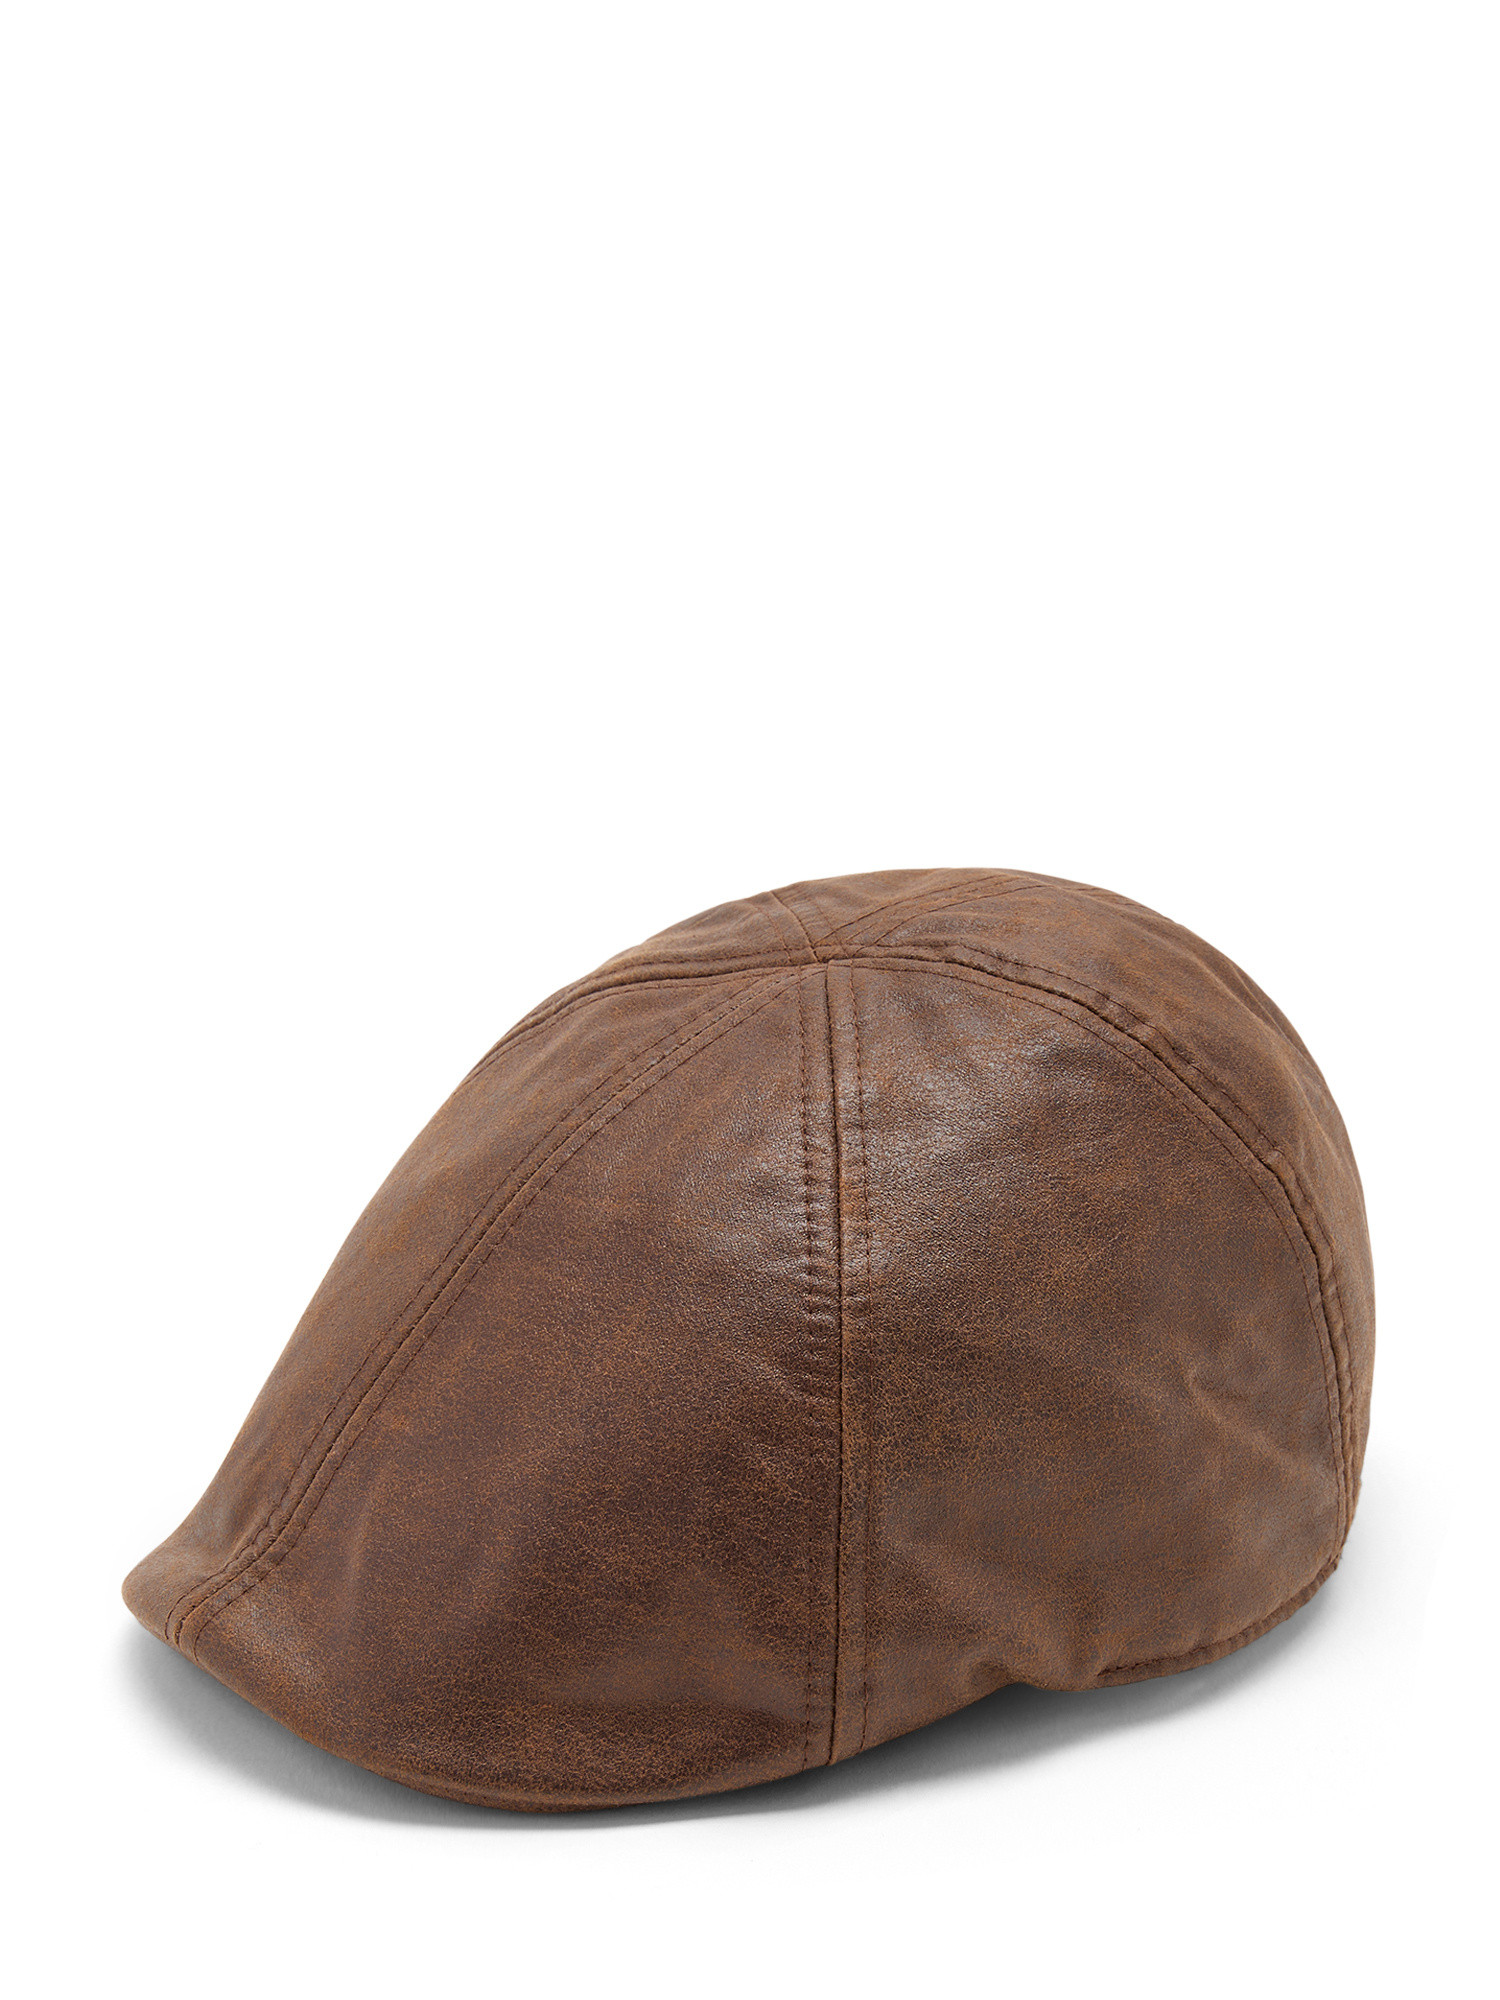 Luca D'Altieri - Synthetic cap, Dark Brown, large image number 0